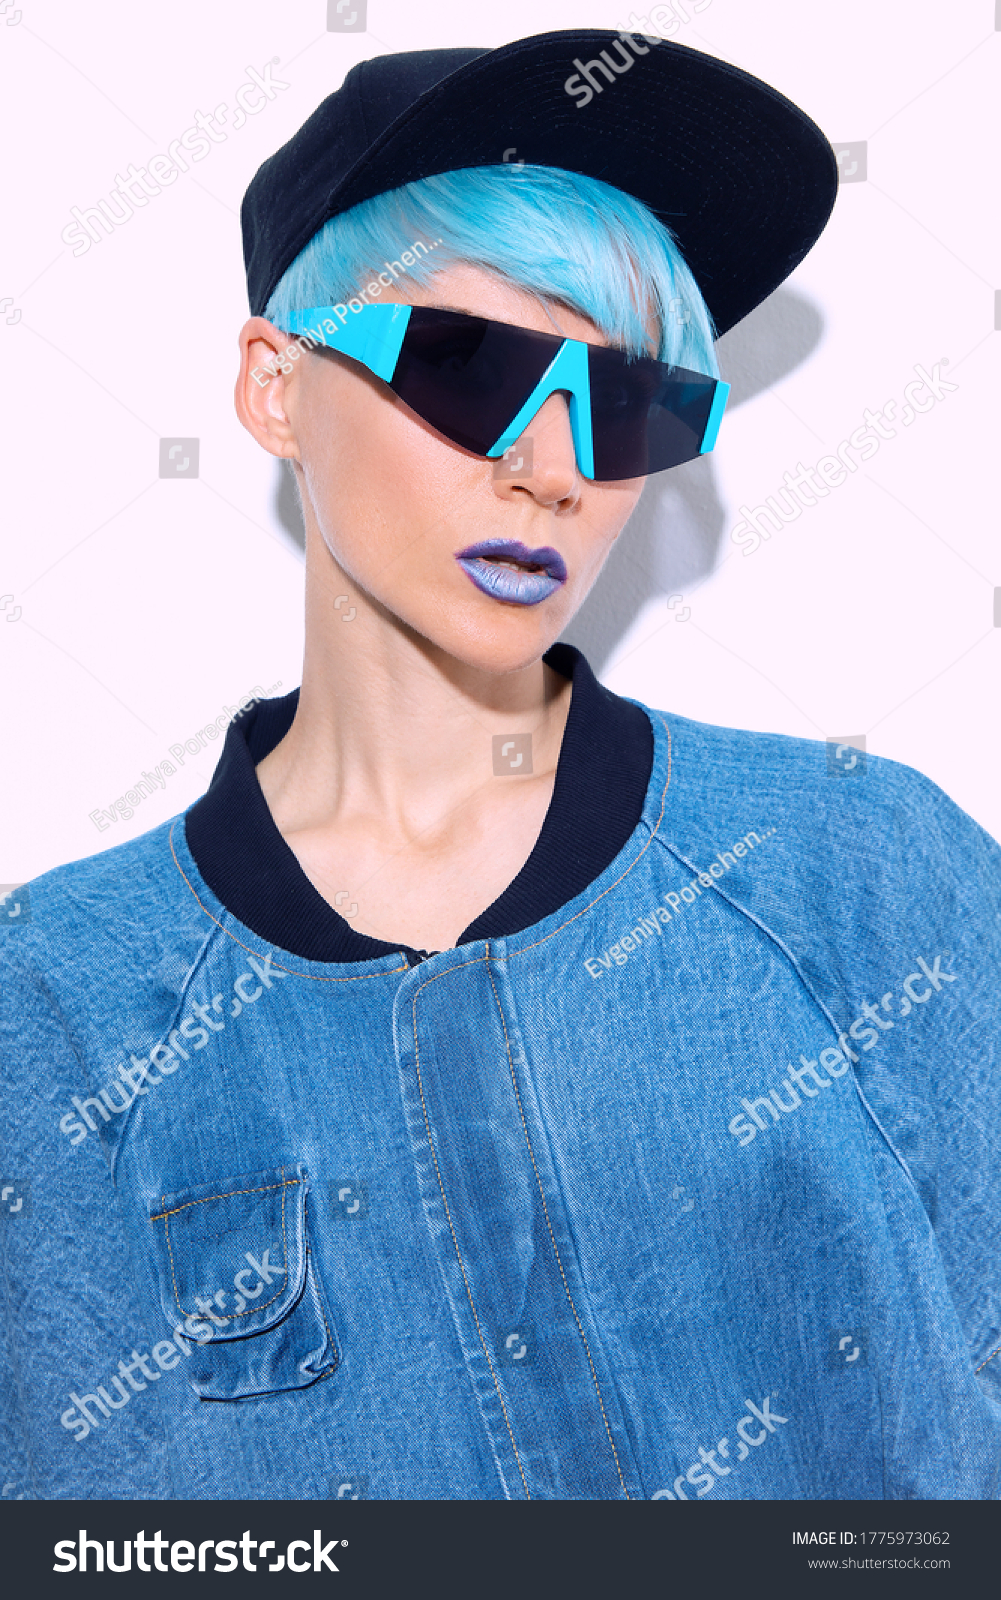 Fashion Model Short Blue Colored Hair Stock Photo 1775973062 | Shutterstock